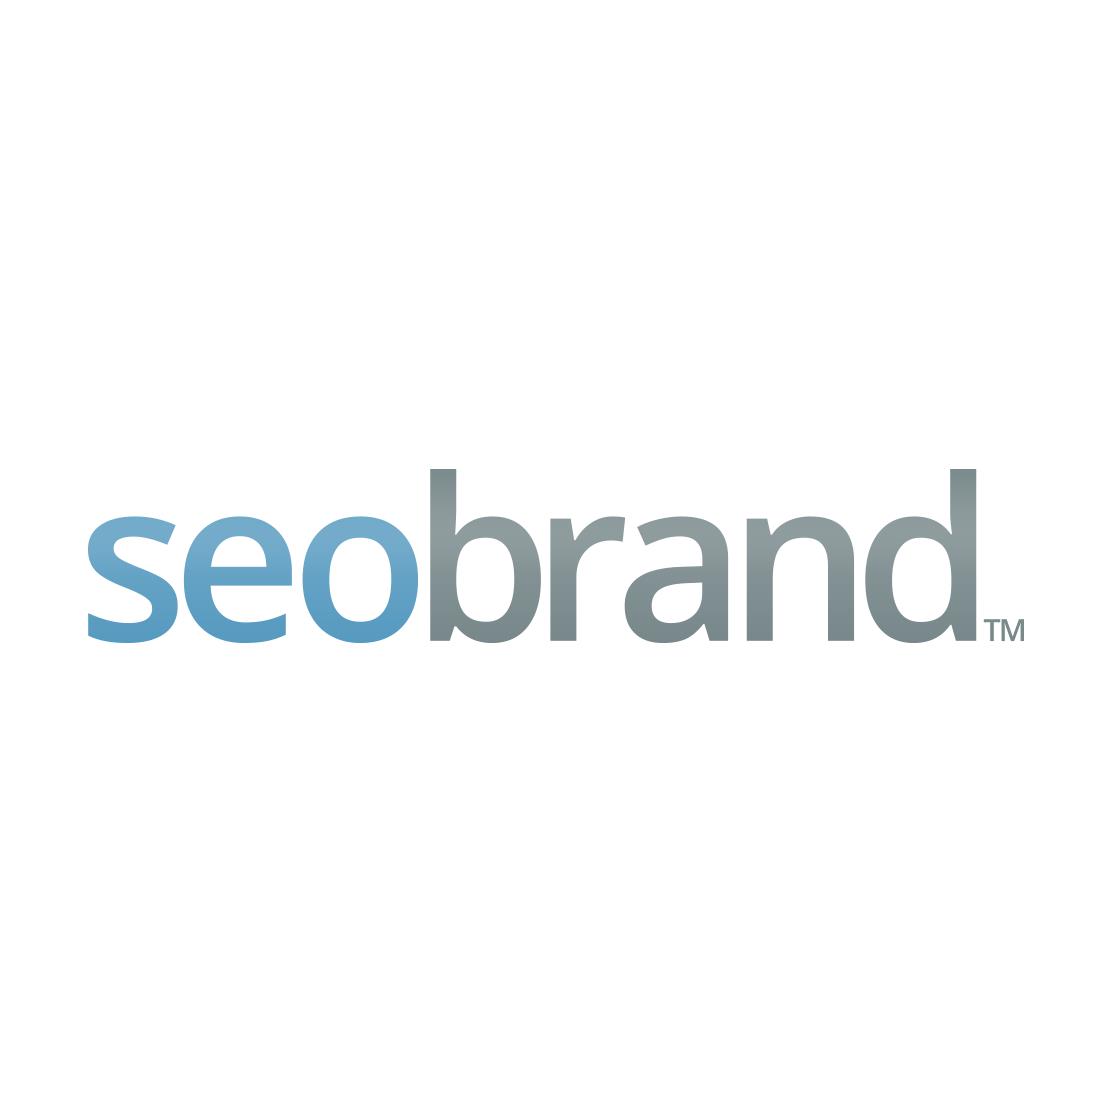 Top NYC SEO Agency Logo: SEO Brand